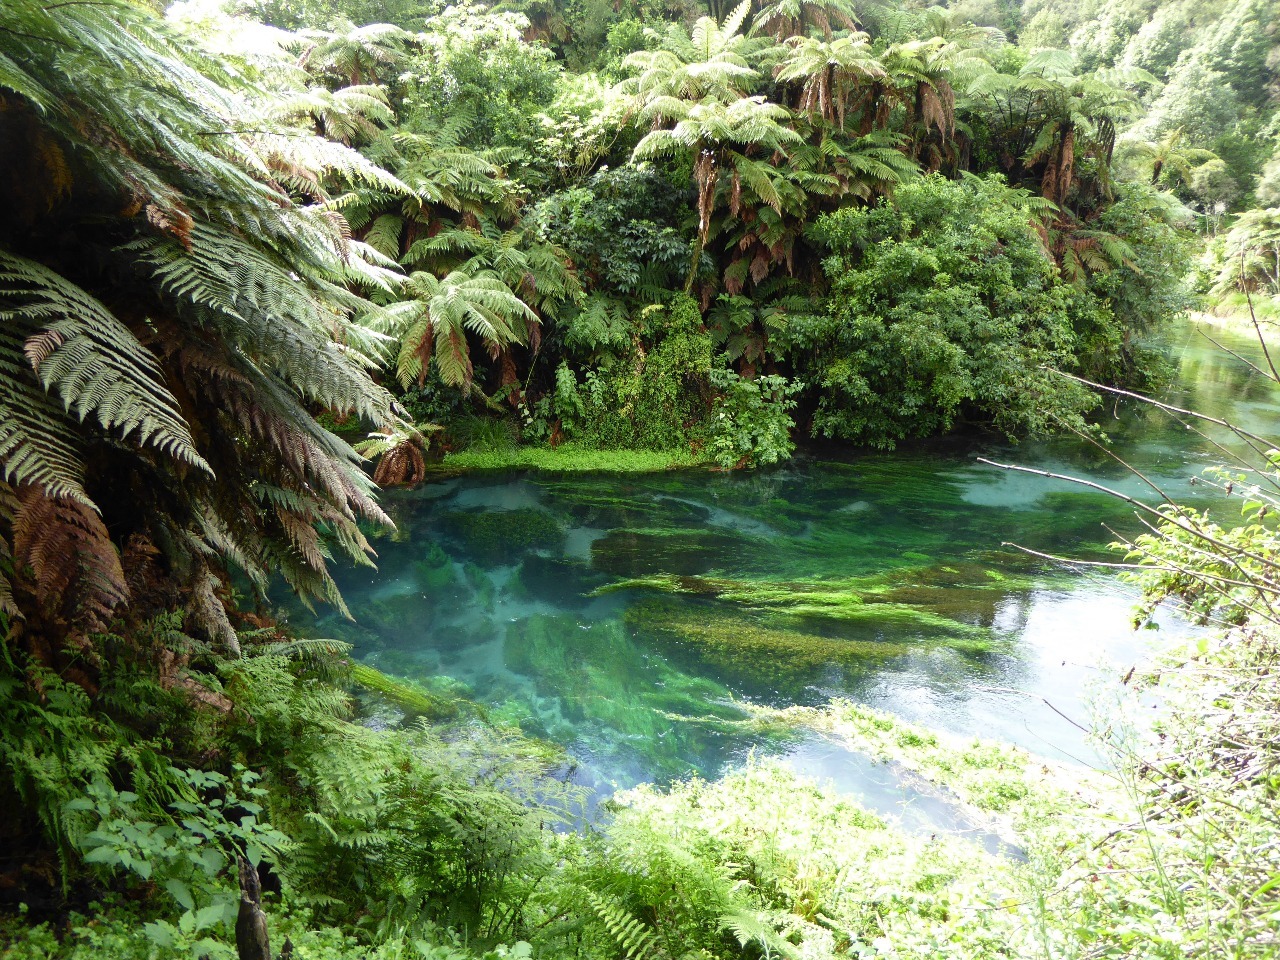 The blue, blue waters of Te Waihou Stream